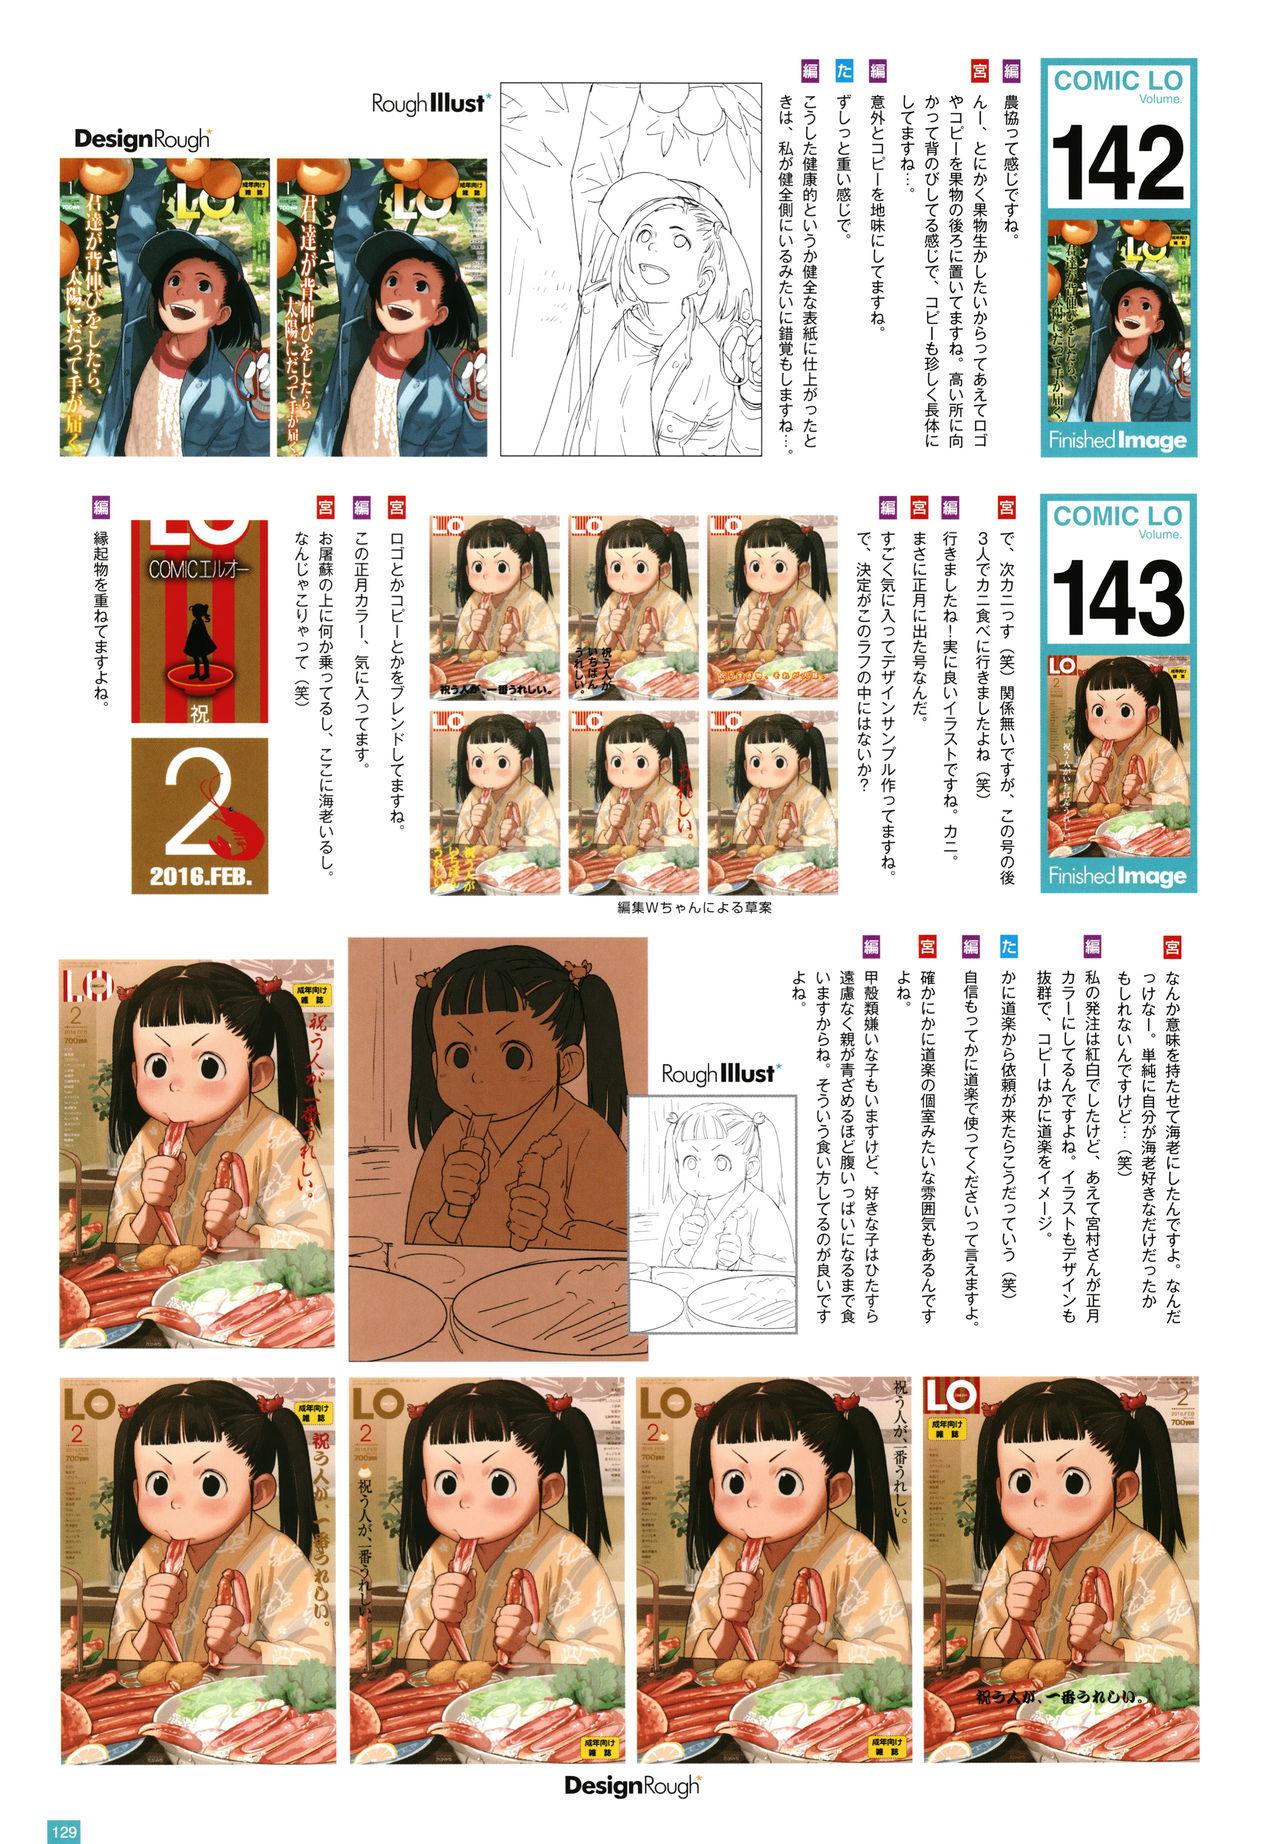 [Takamichi] LO Artbook 2-B TAKAMICHI LO-fi WORKS 131